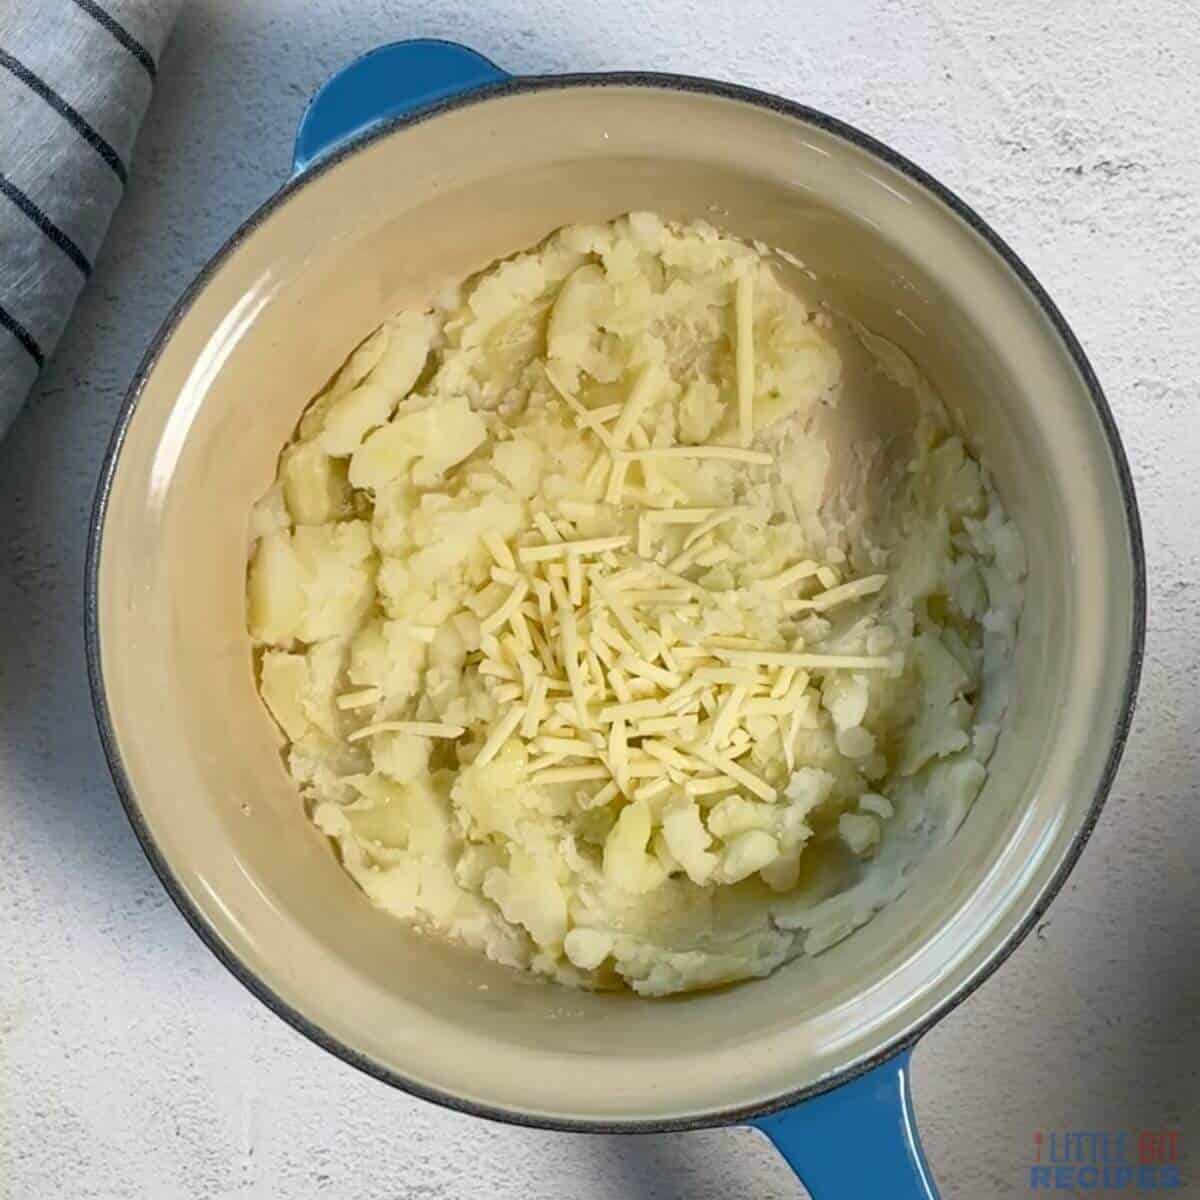 adding cheese to mashed potato.